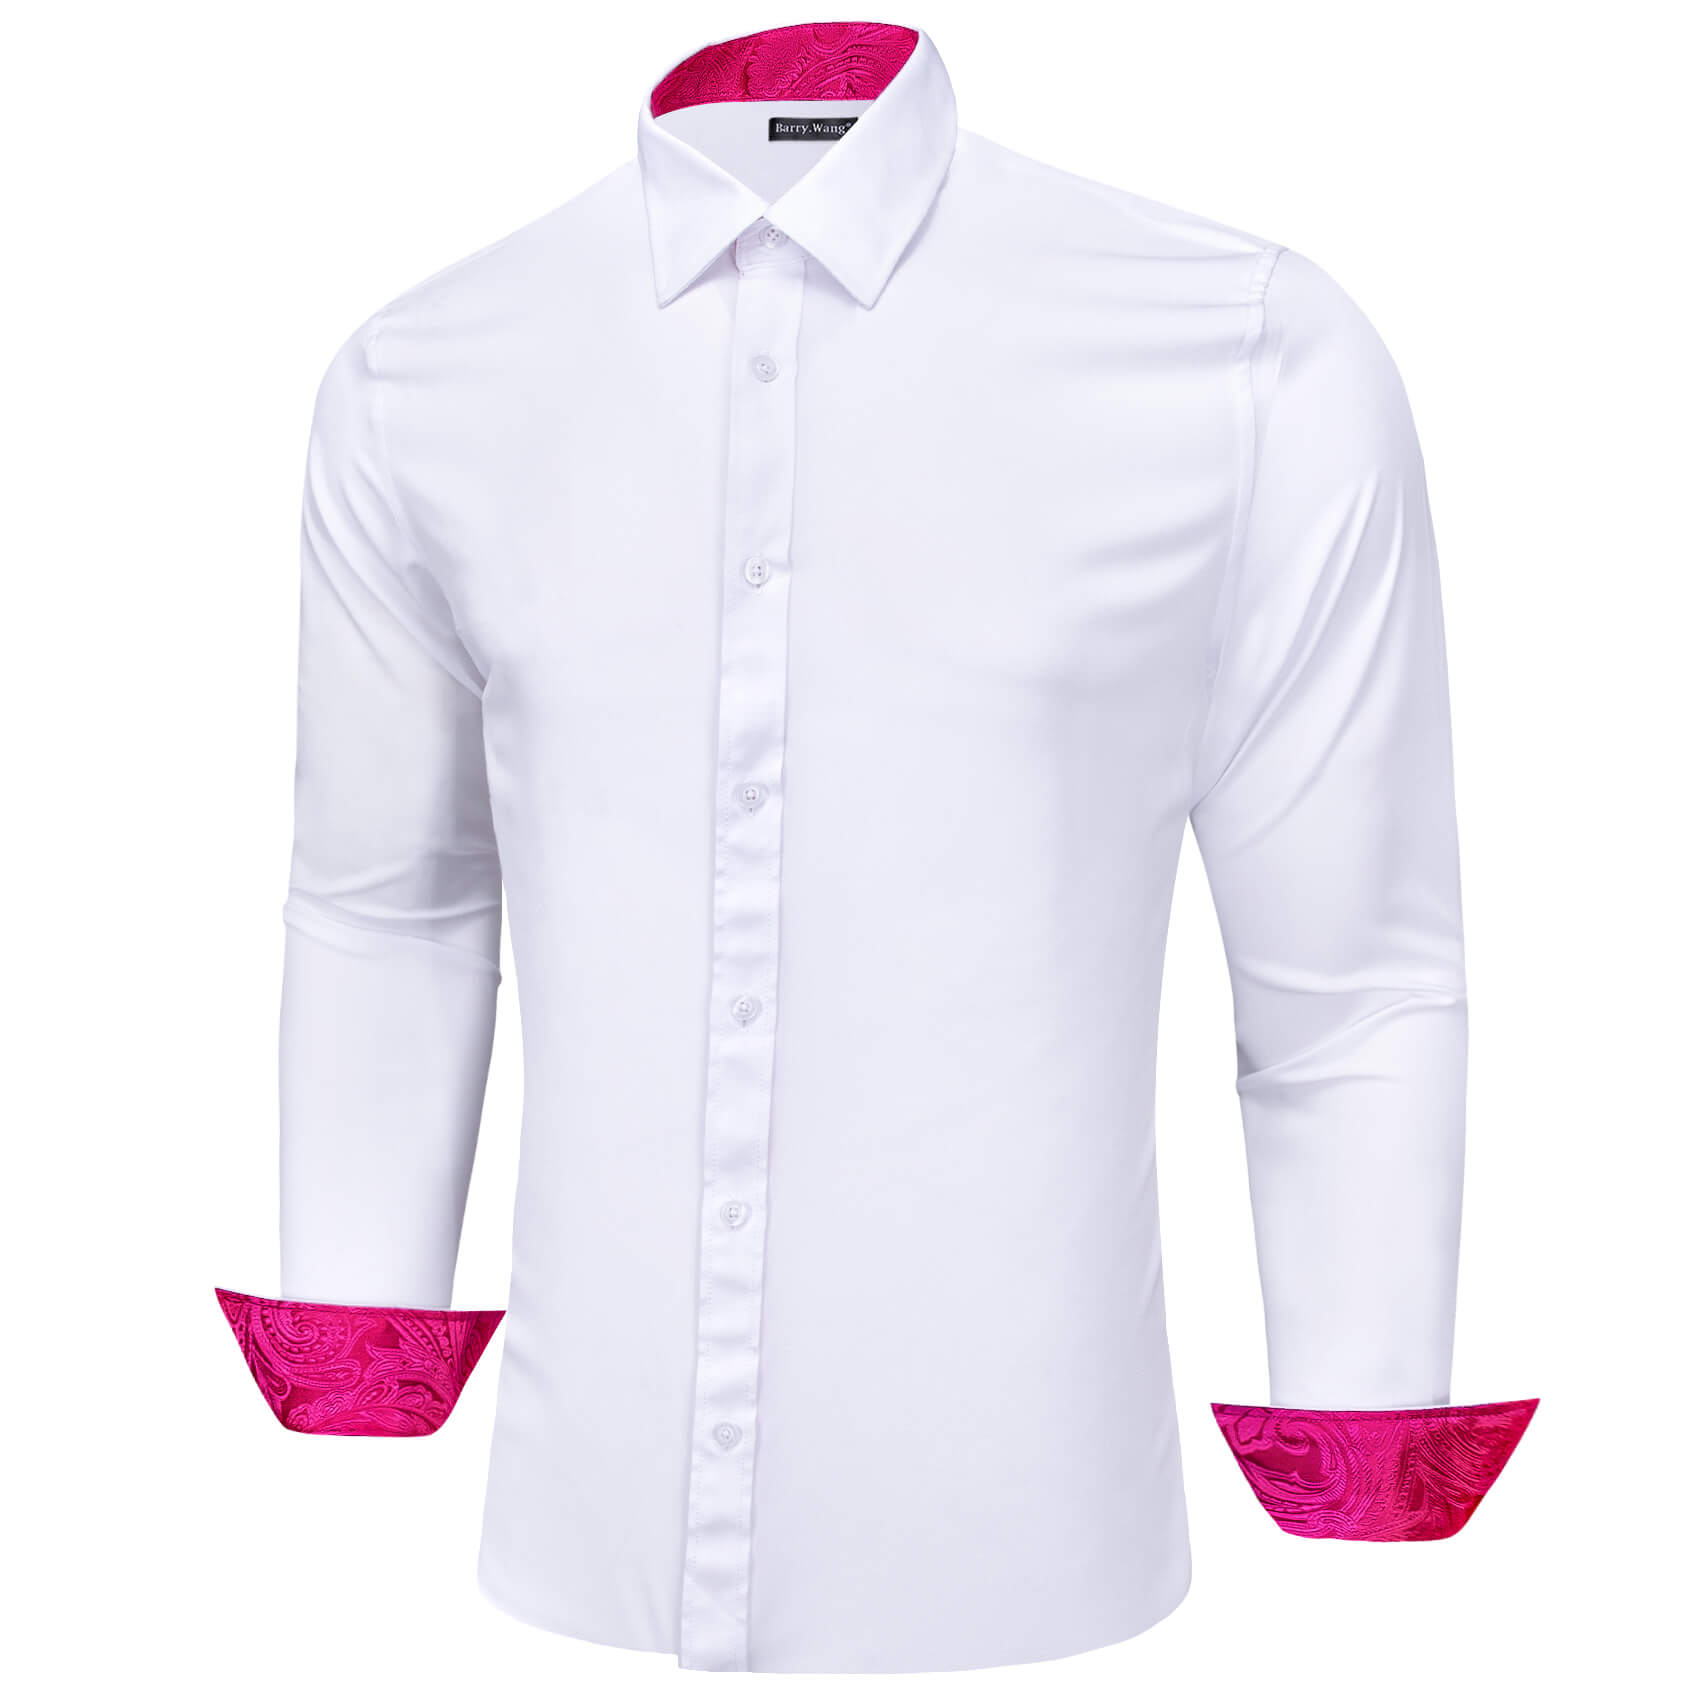 Barry.wang Splicing Shirt White Rose Pink Paisley Men's Long Sleeve Shirt